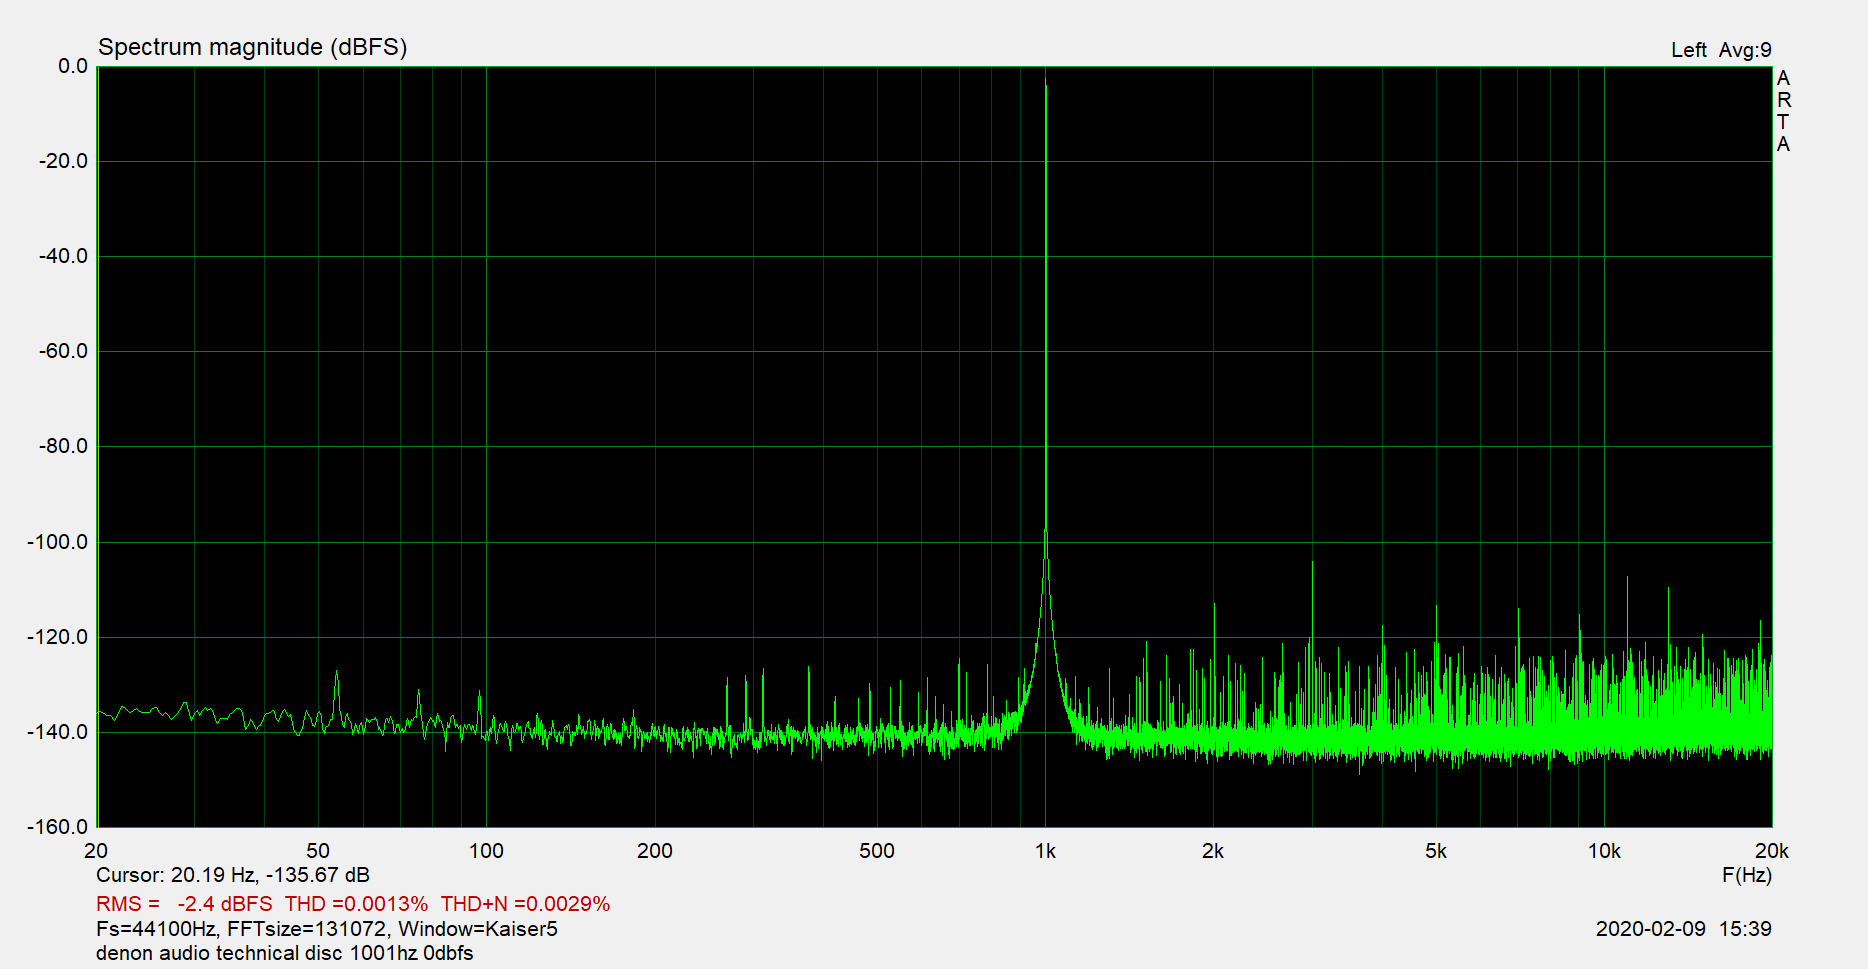 denon audio technical dsic 1001hz 0dBfs.png